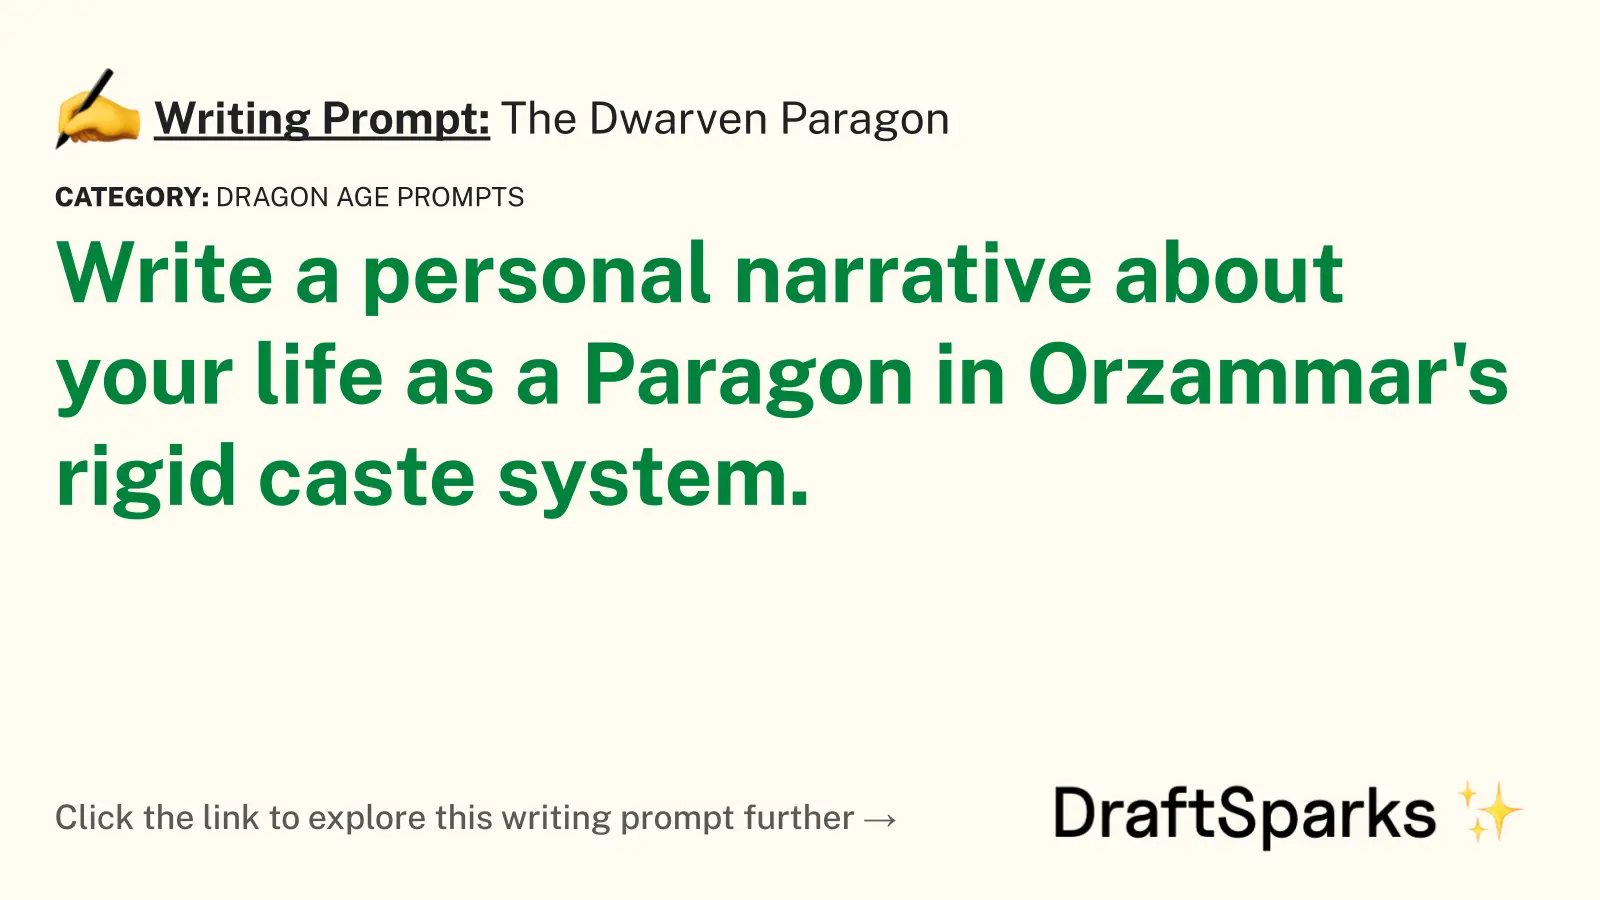 The Dwarven Paragon